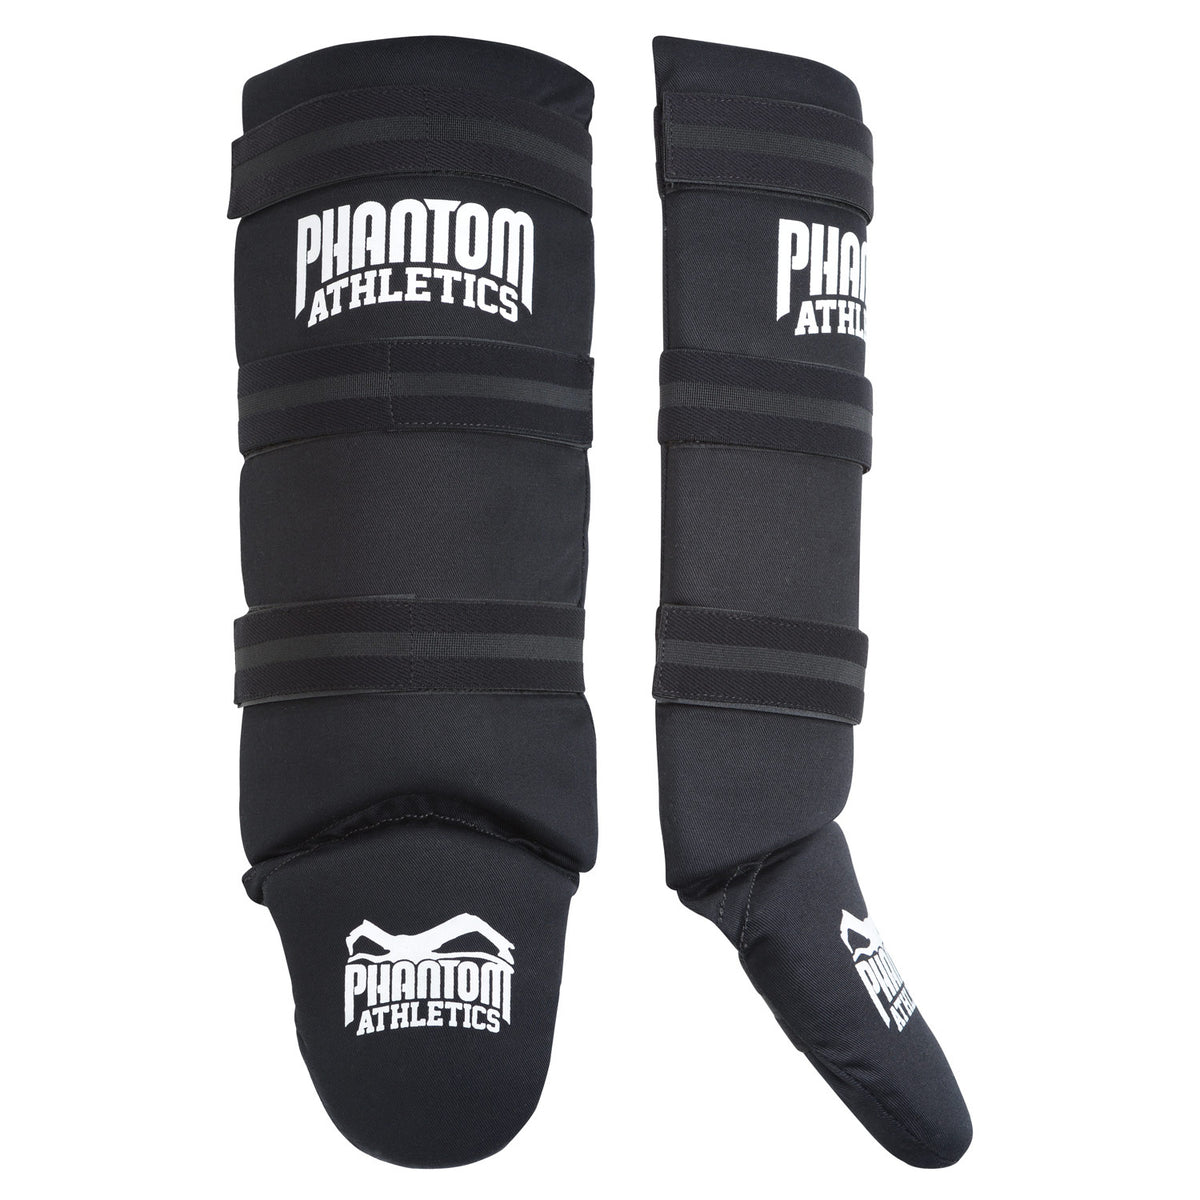 Phantom vechtsportscheenbeschermers Impact Basic met dikke schuimvulling